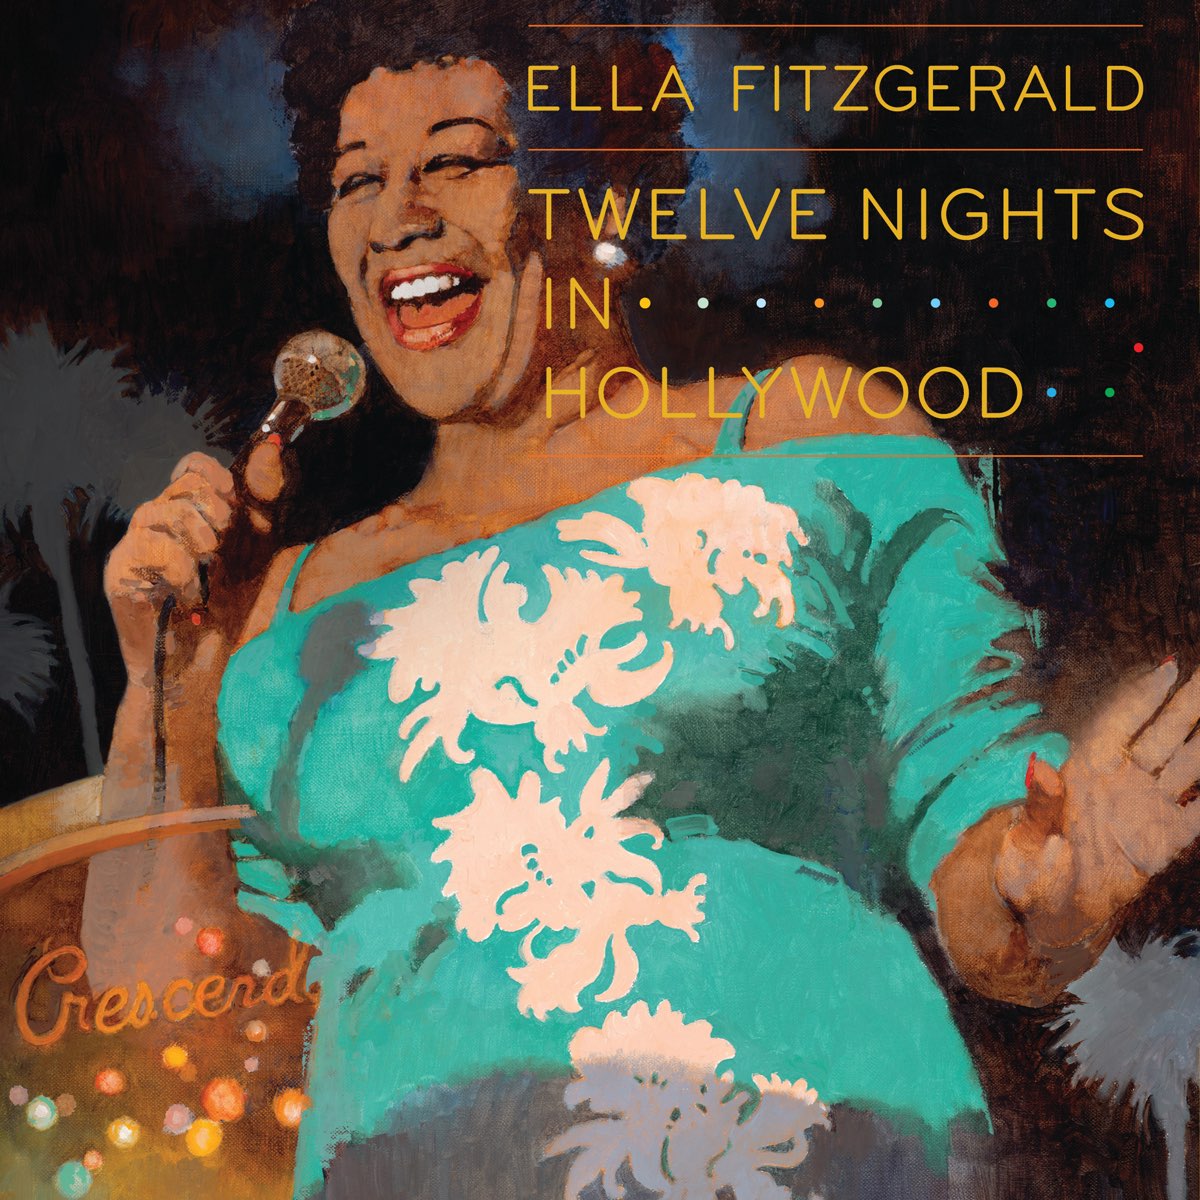 Twelve Nights In Hollywood (Live) by Ella Fitzgerald.